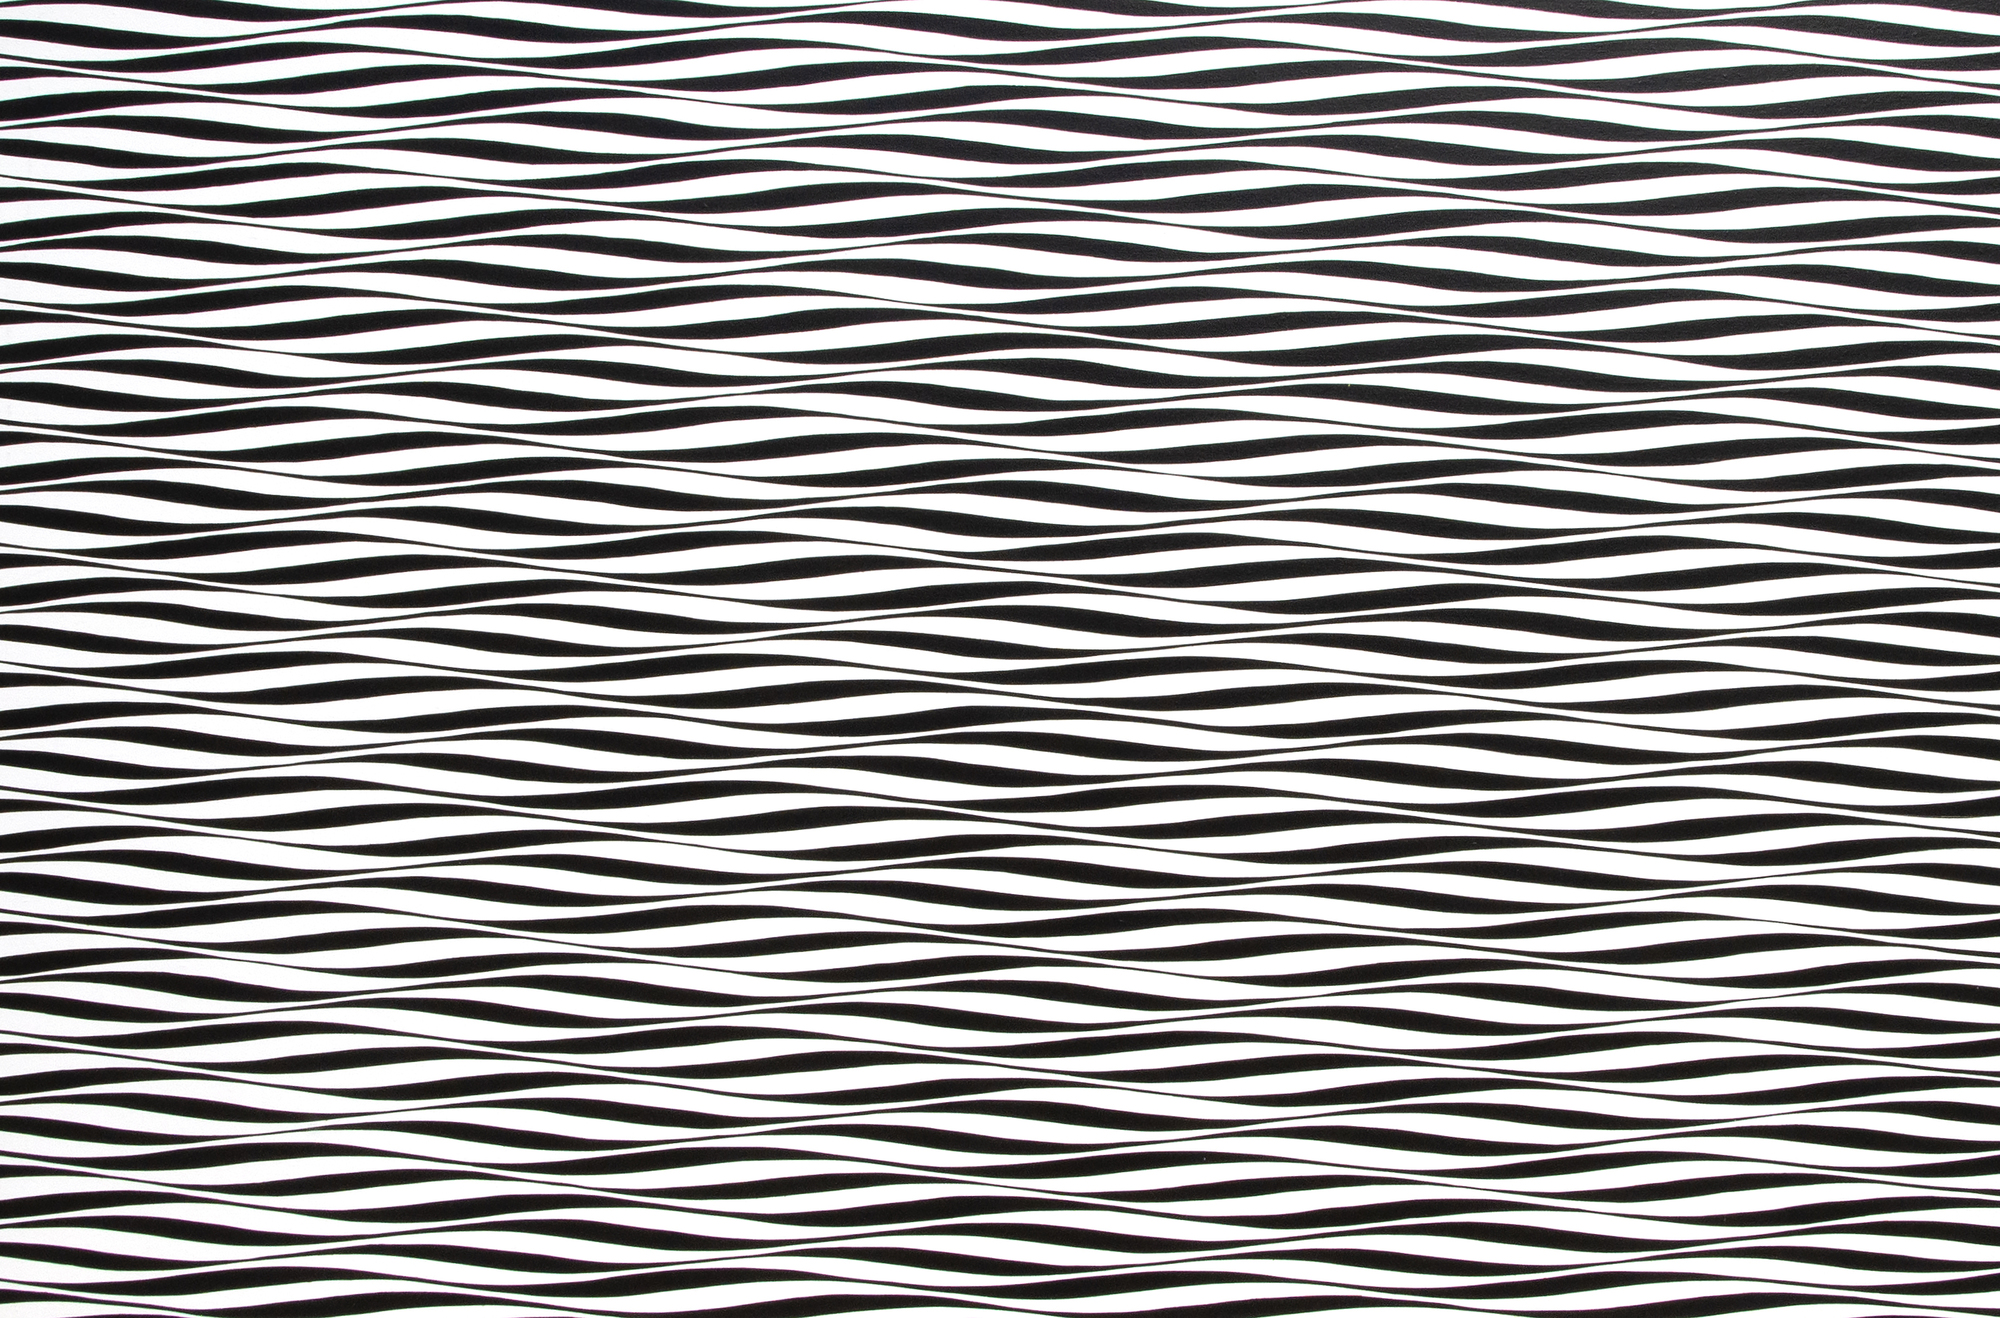 FRANCIS CELENTANO - Undulating Units - acrylic on canvas - 36 x 90 in.